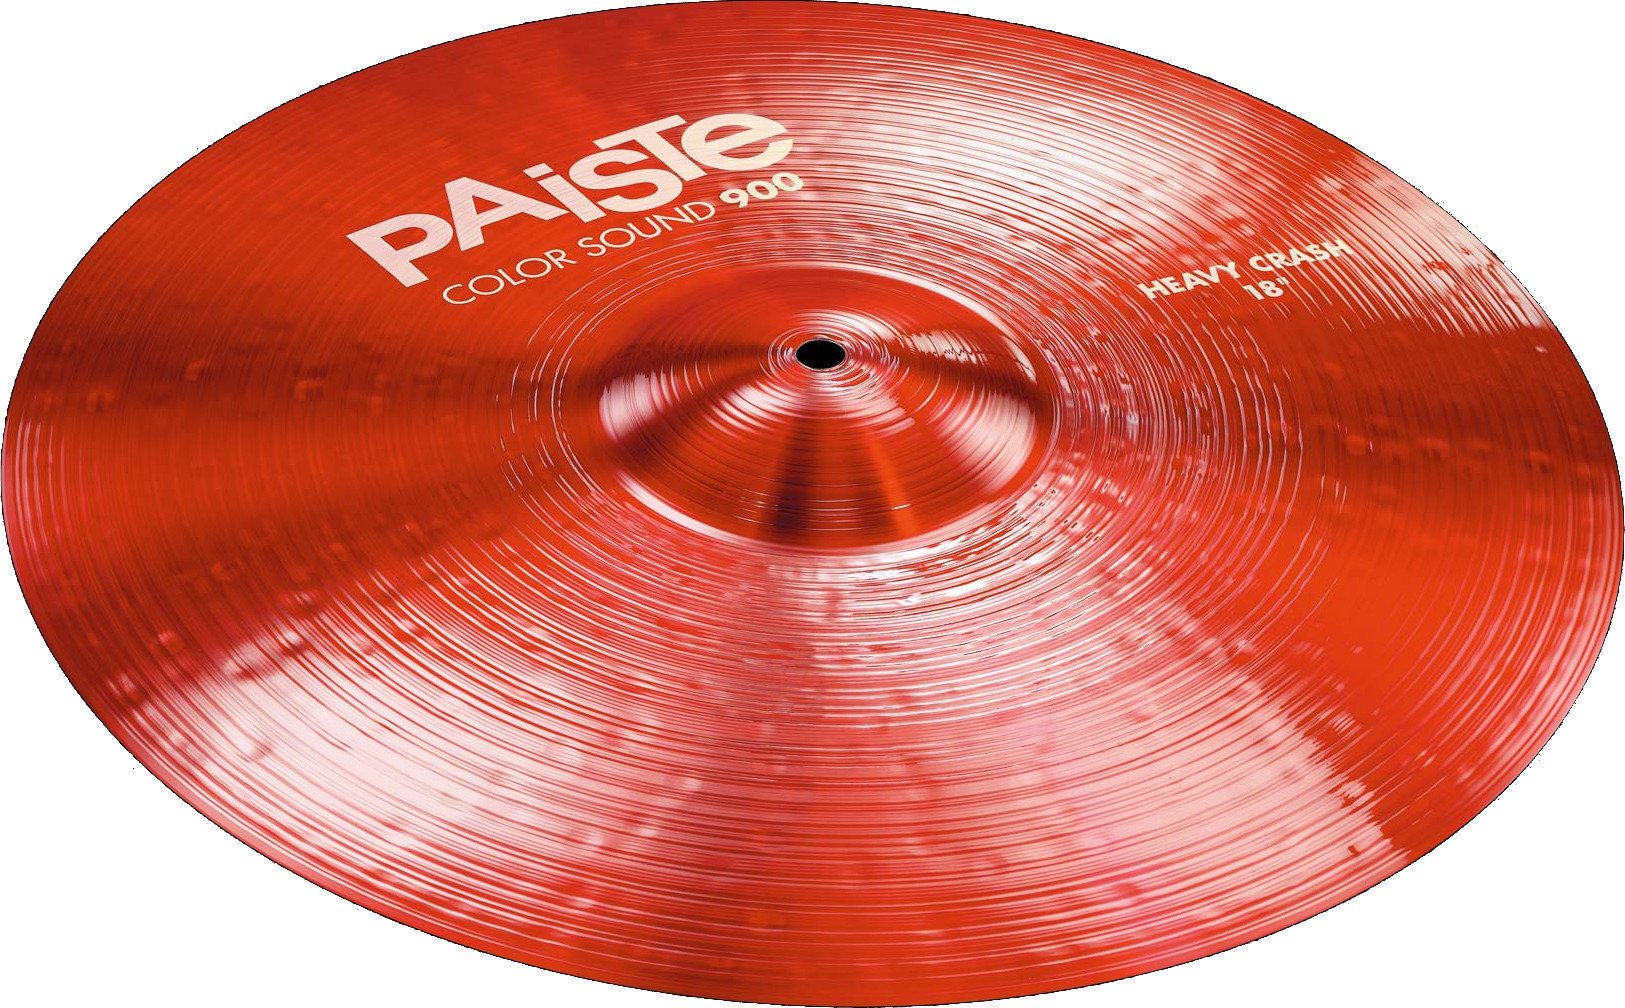 Crash Cymbal Paiste Color Sound 900  Heavy Crash Cymbal 19" Röd